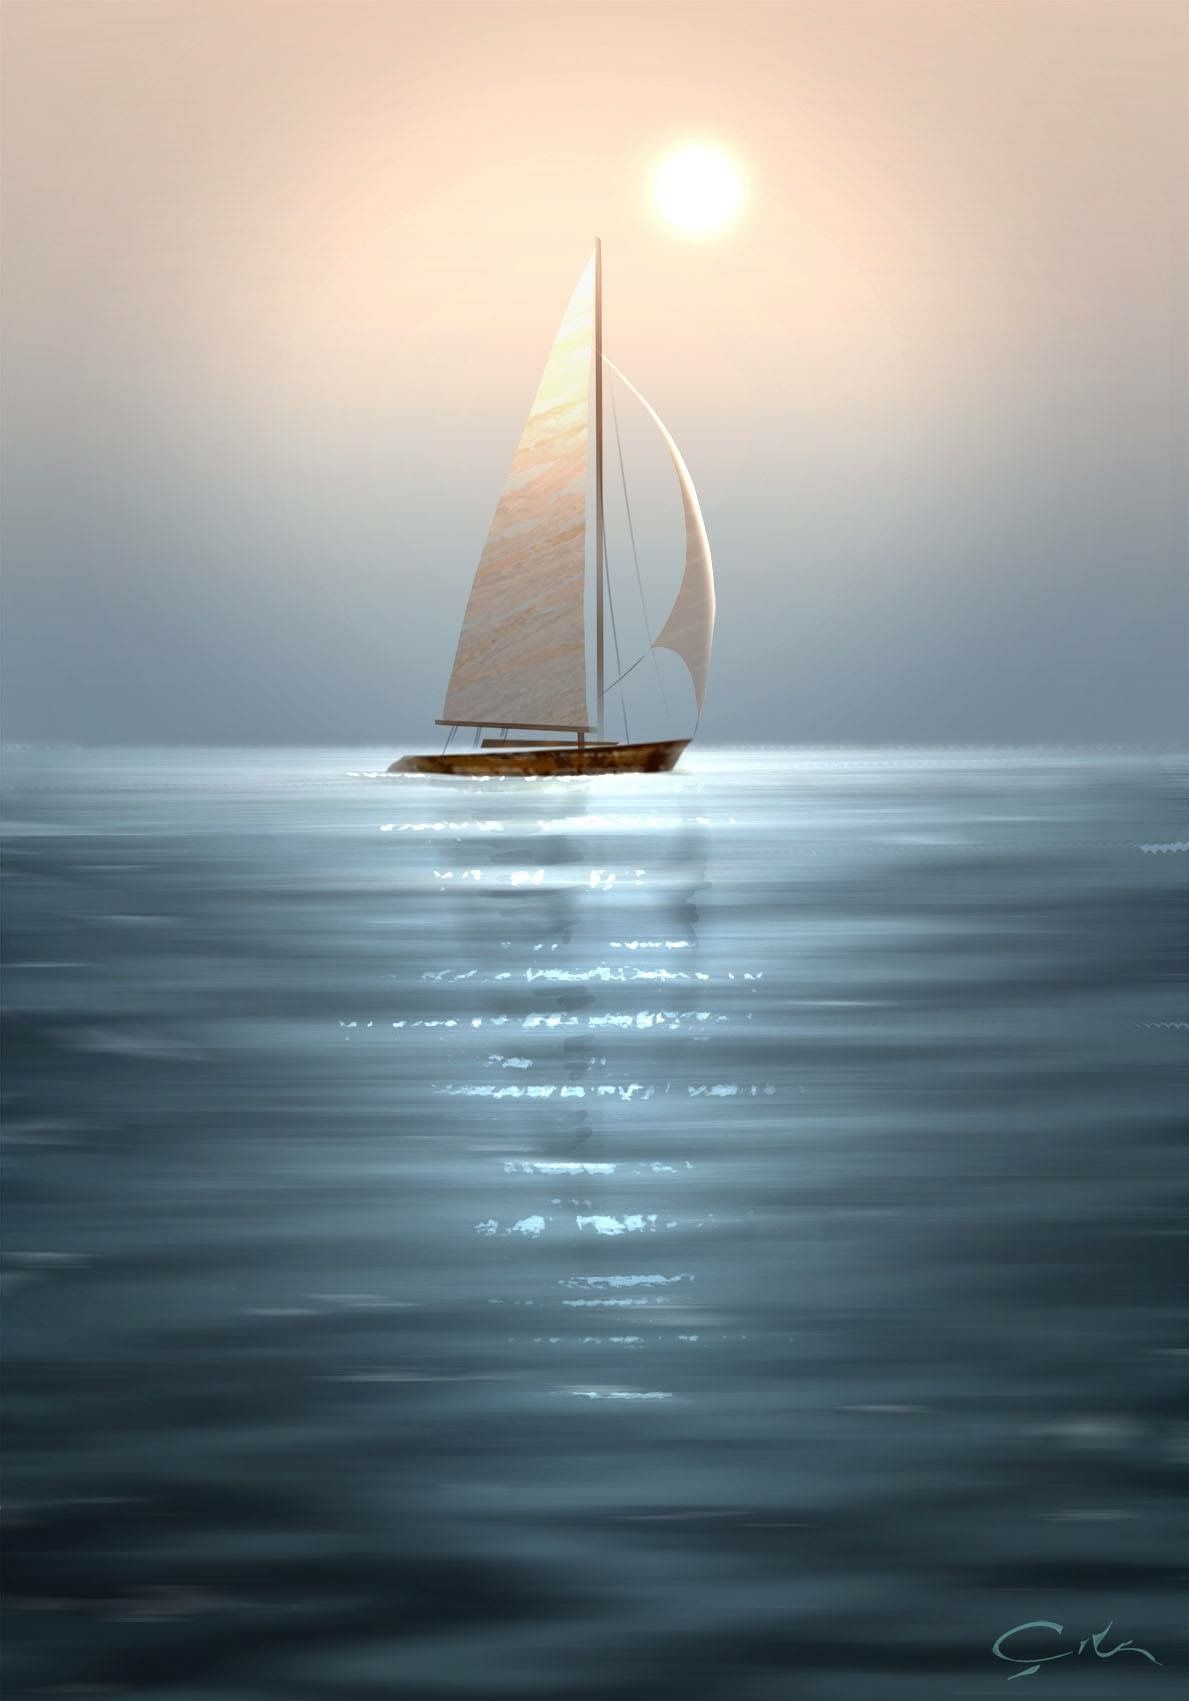 Wallpaper of Boat and yacht sailing at ocean sea #wallpaper #boat